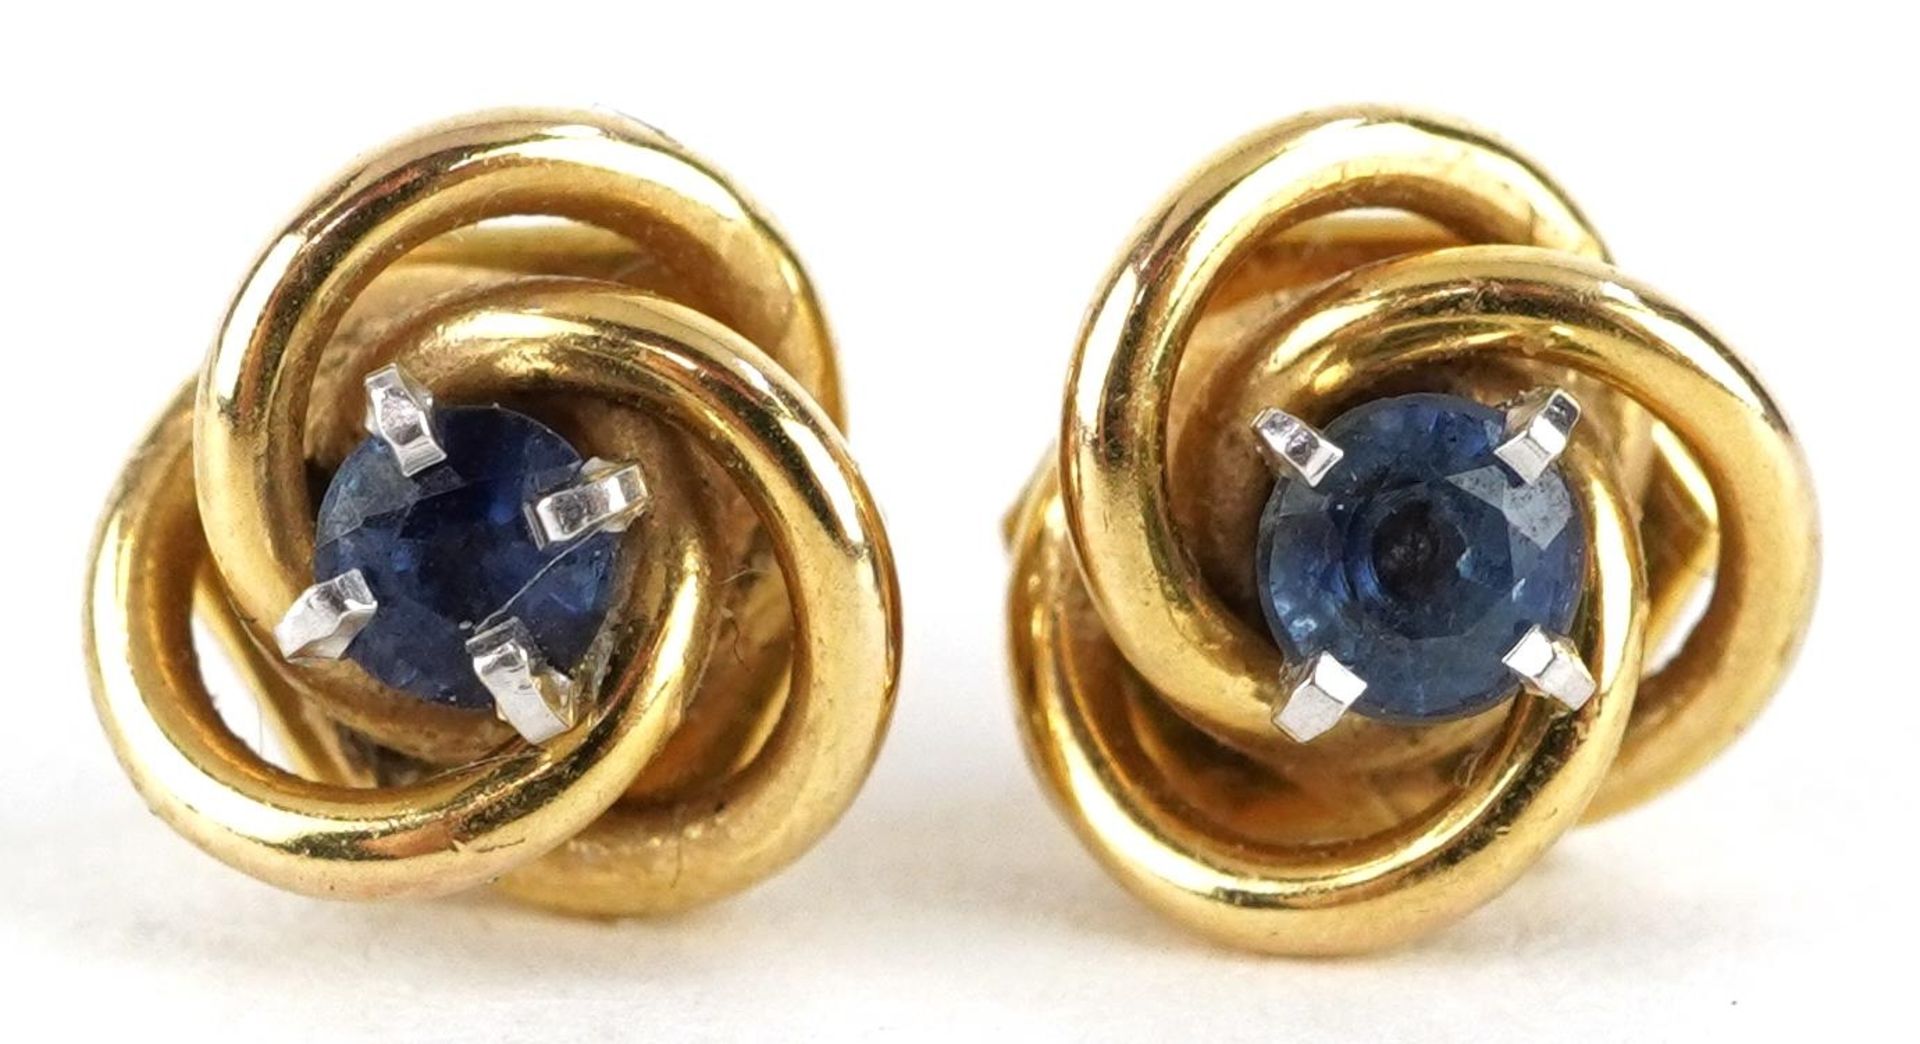 Pair of 9ct gold sapphire knot design stud earrings, 8.0mm in diameter, 1.7g